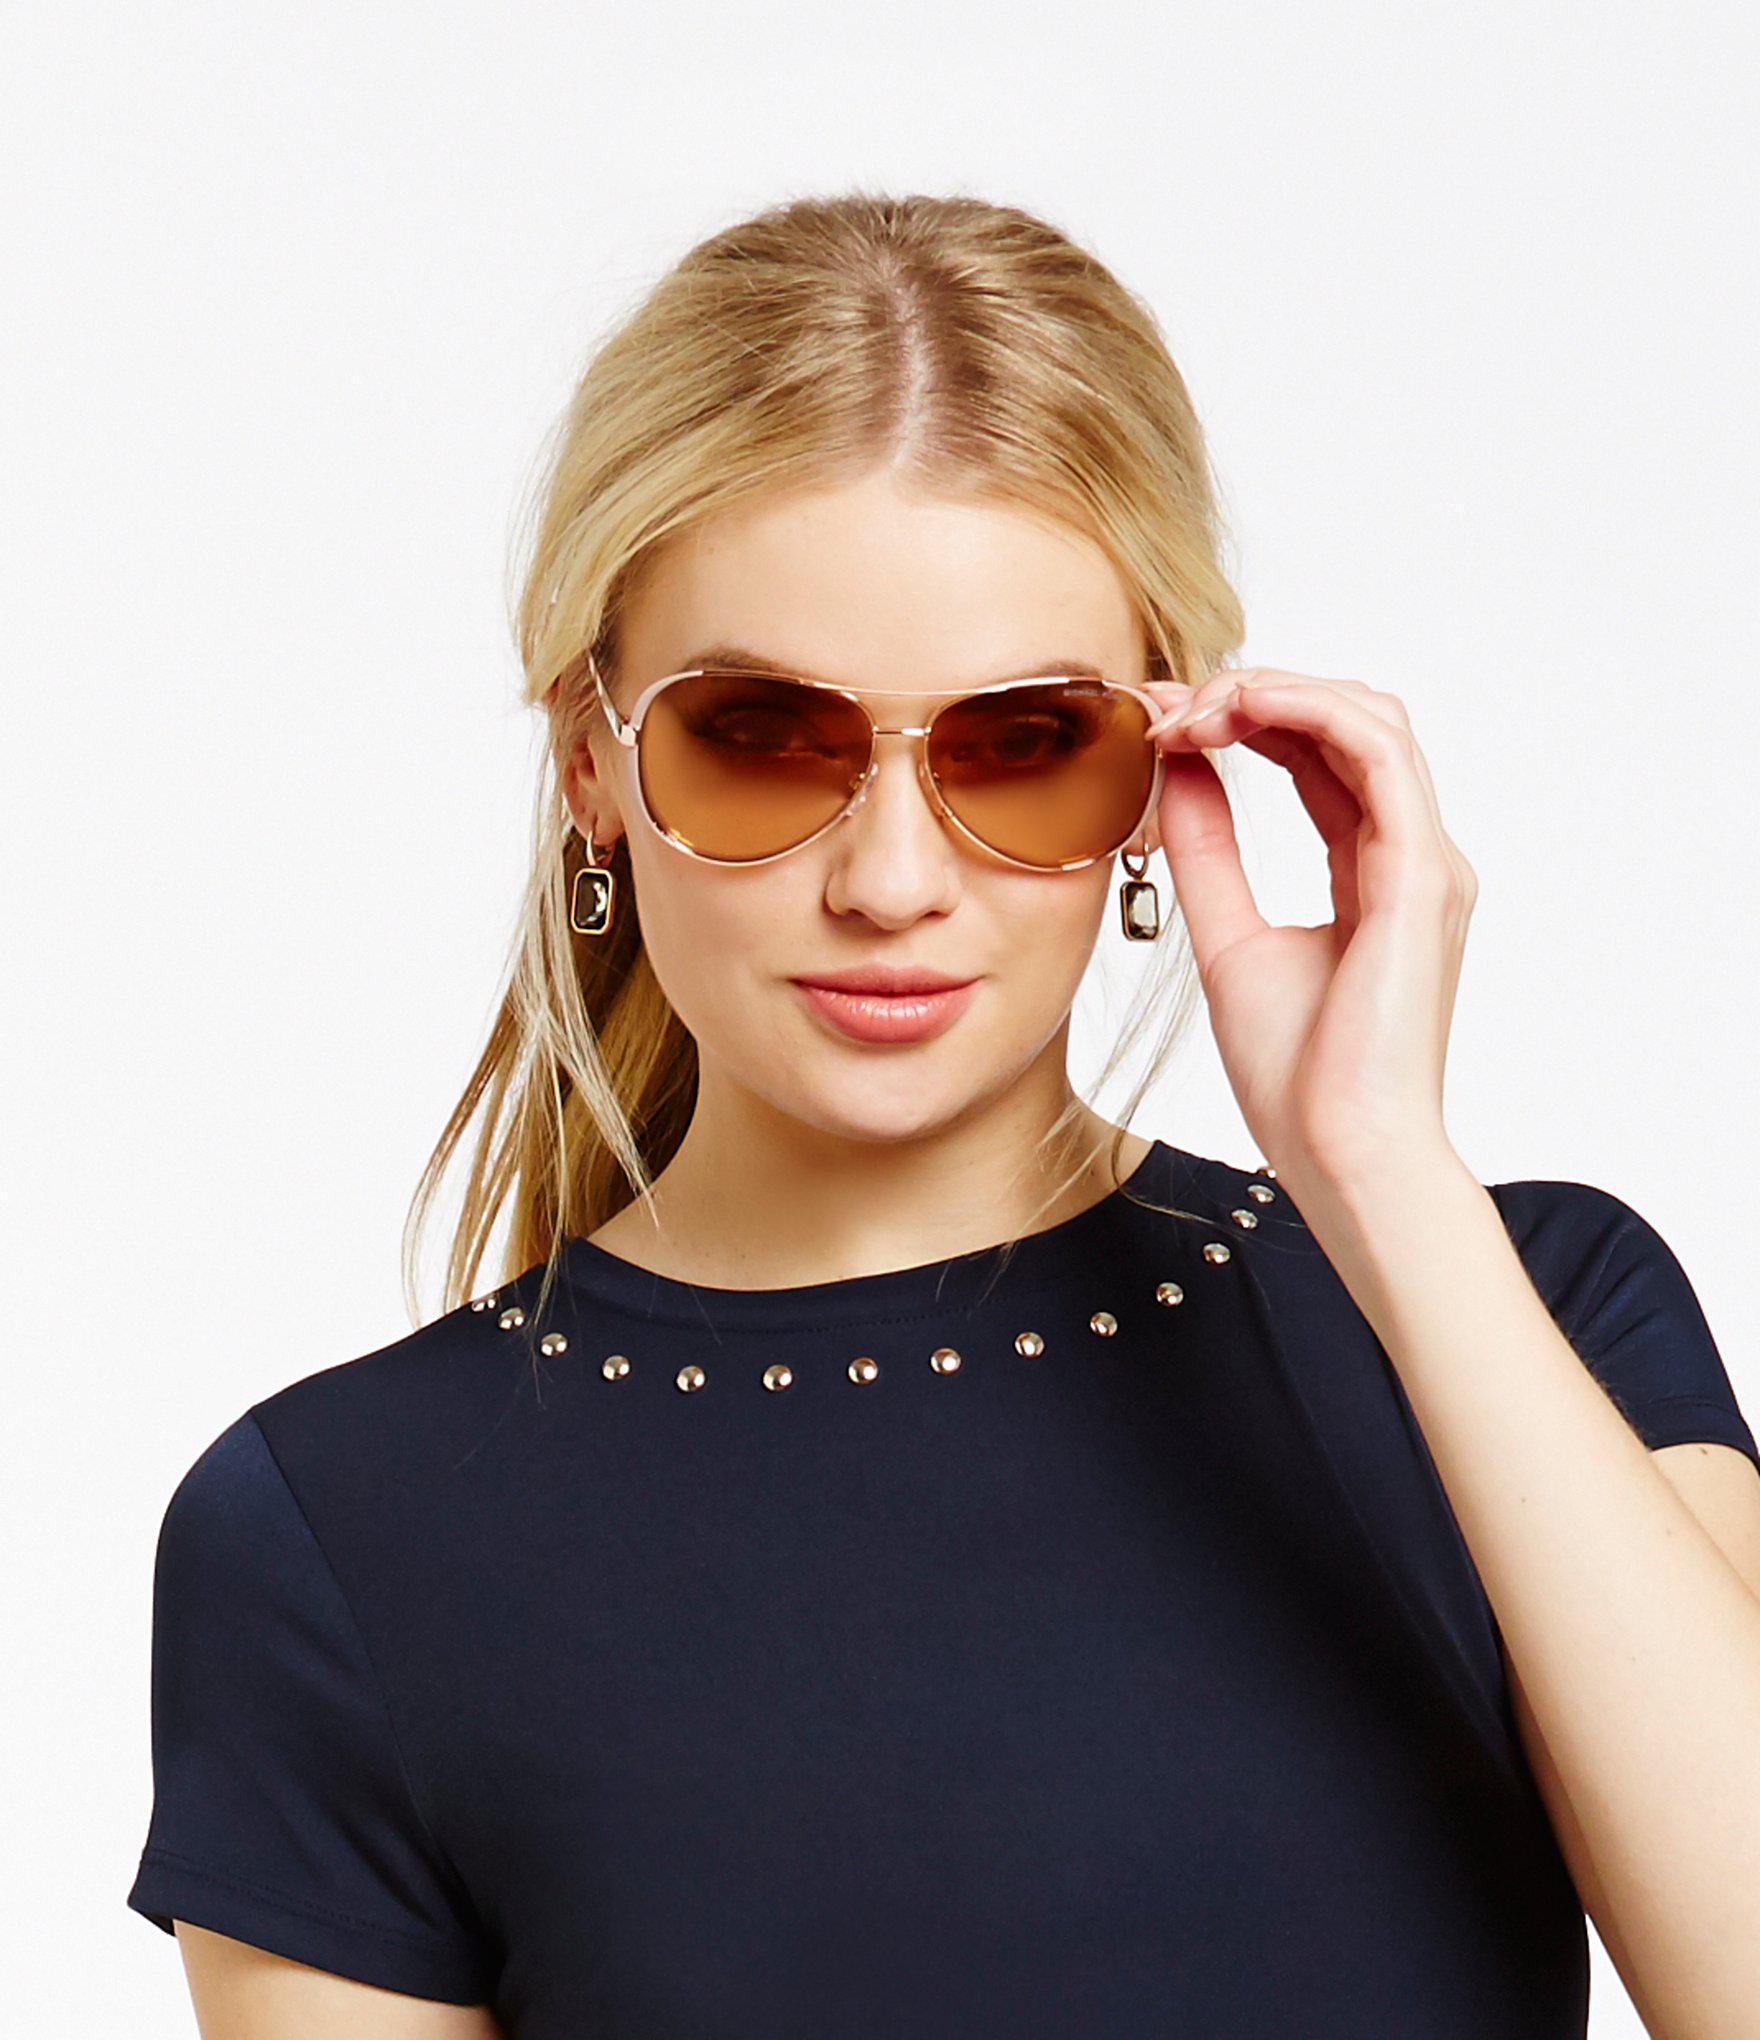 Chelsea Sunglasses Michael Kors Best Sale, 51% OFF | www.markiesminigolf.com